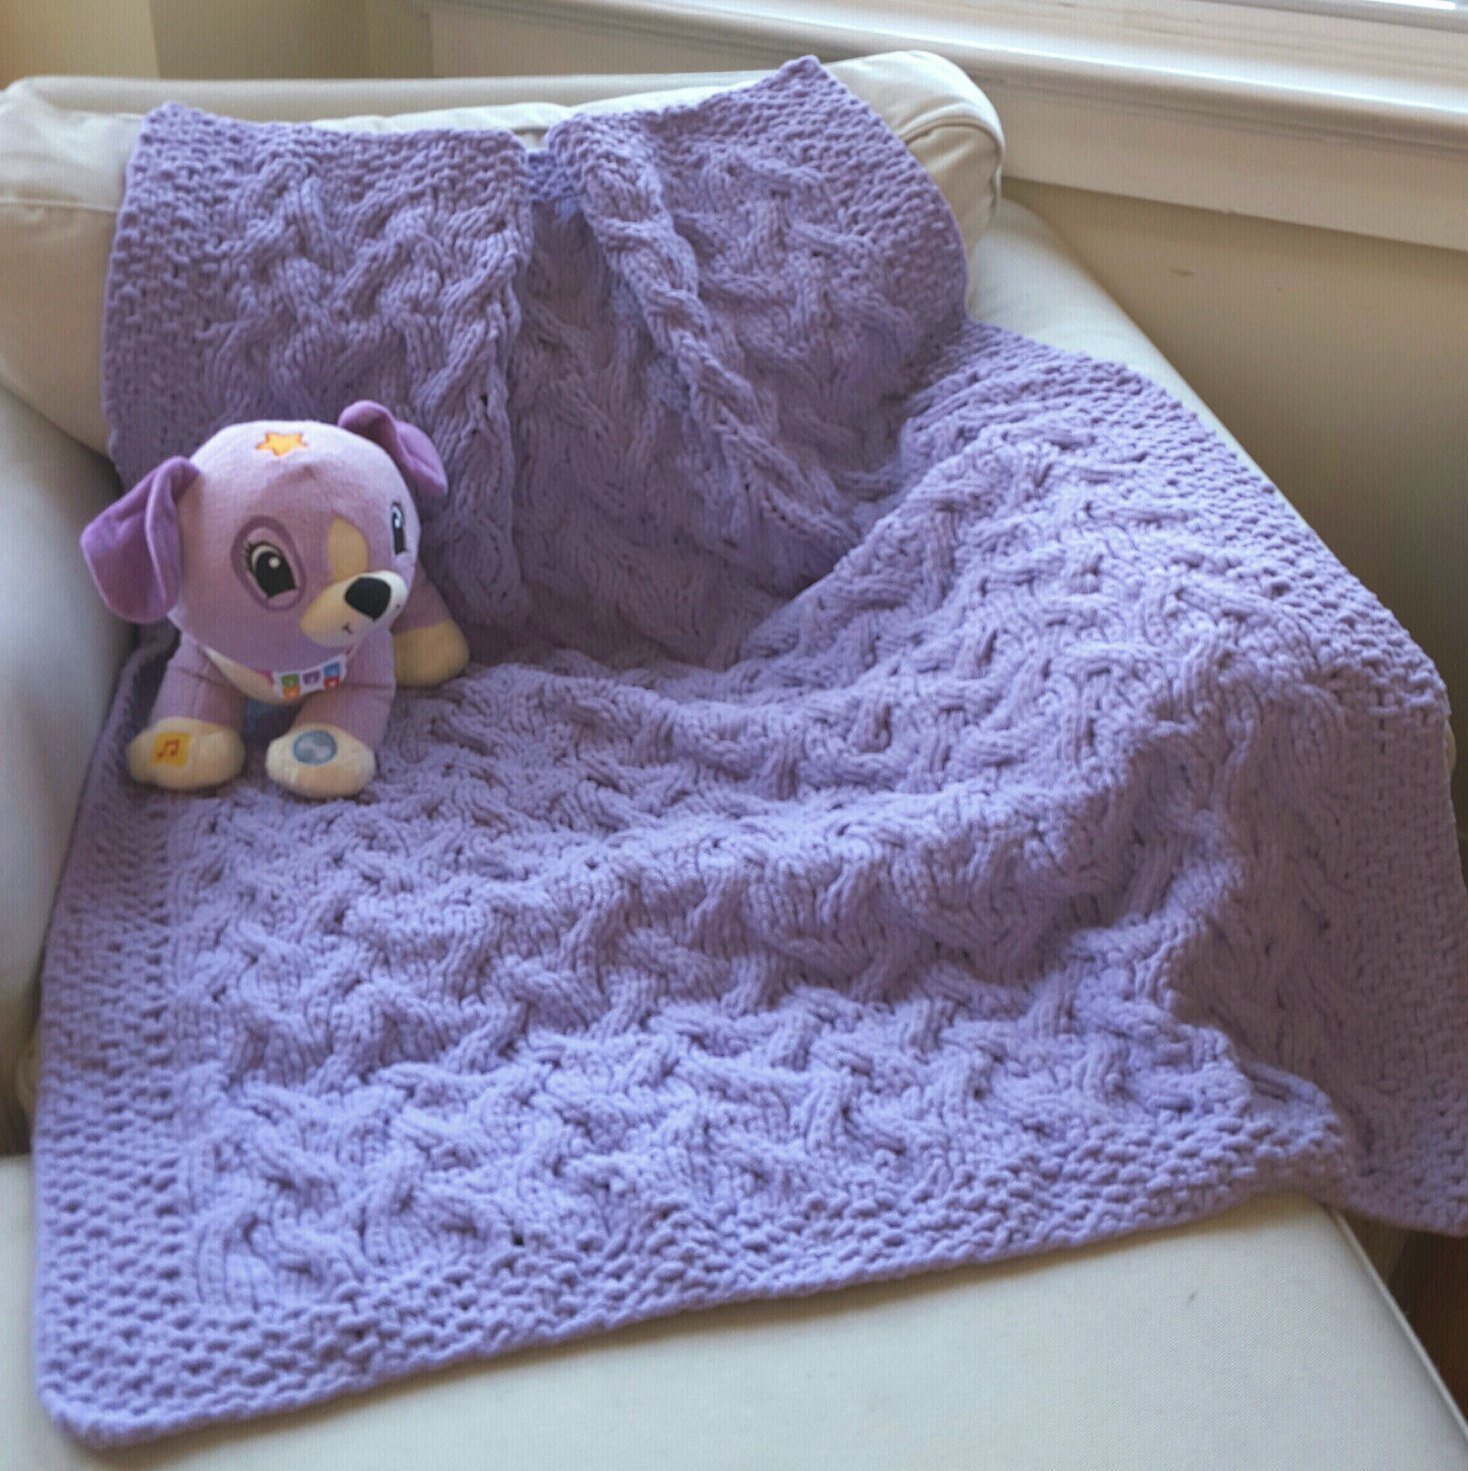 Baby Girl Blanket Knitting Patterns Craftsadore Knitted Ba Girl Layette Free Knitting Pattern Blanket